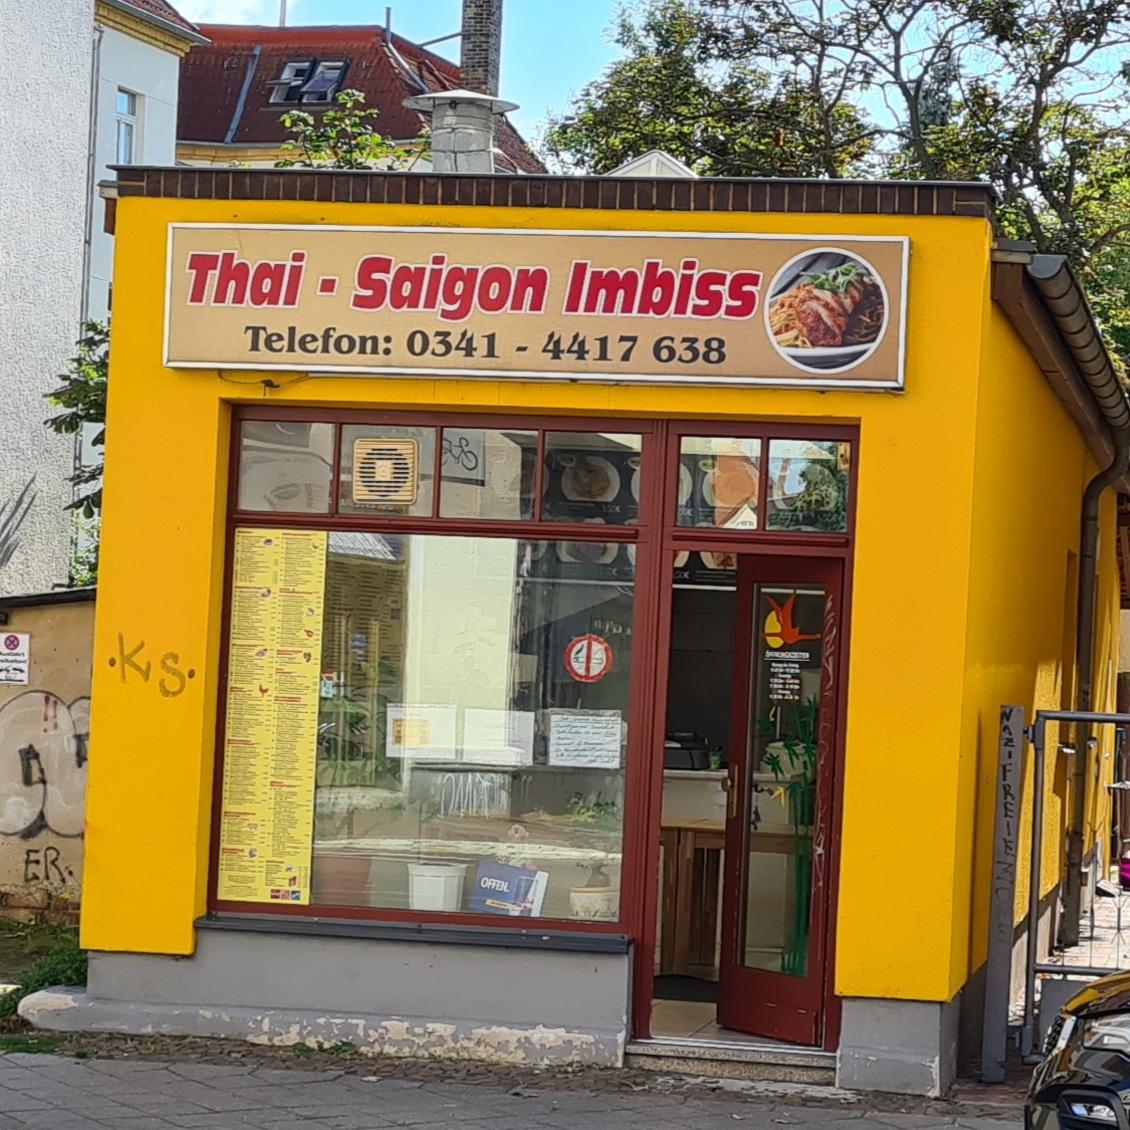 Restaurant "Thai-Saigon-Imbiss" in Leipzig